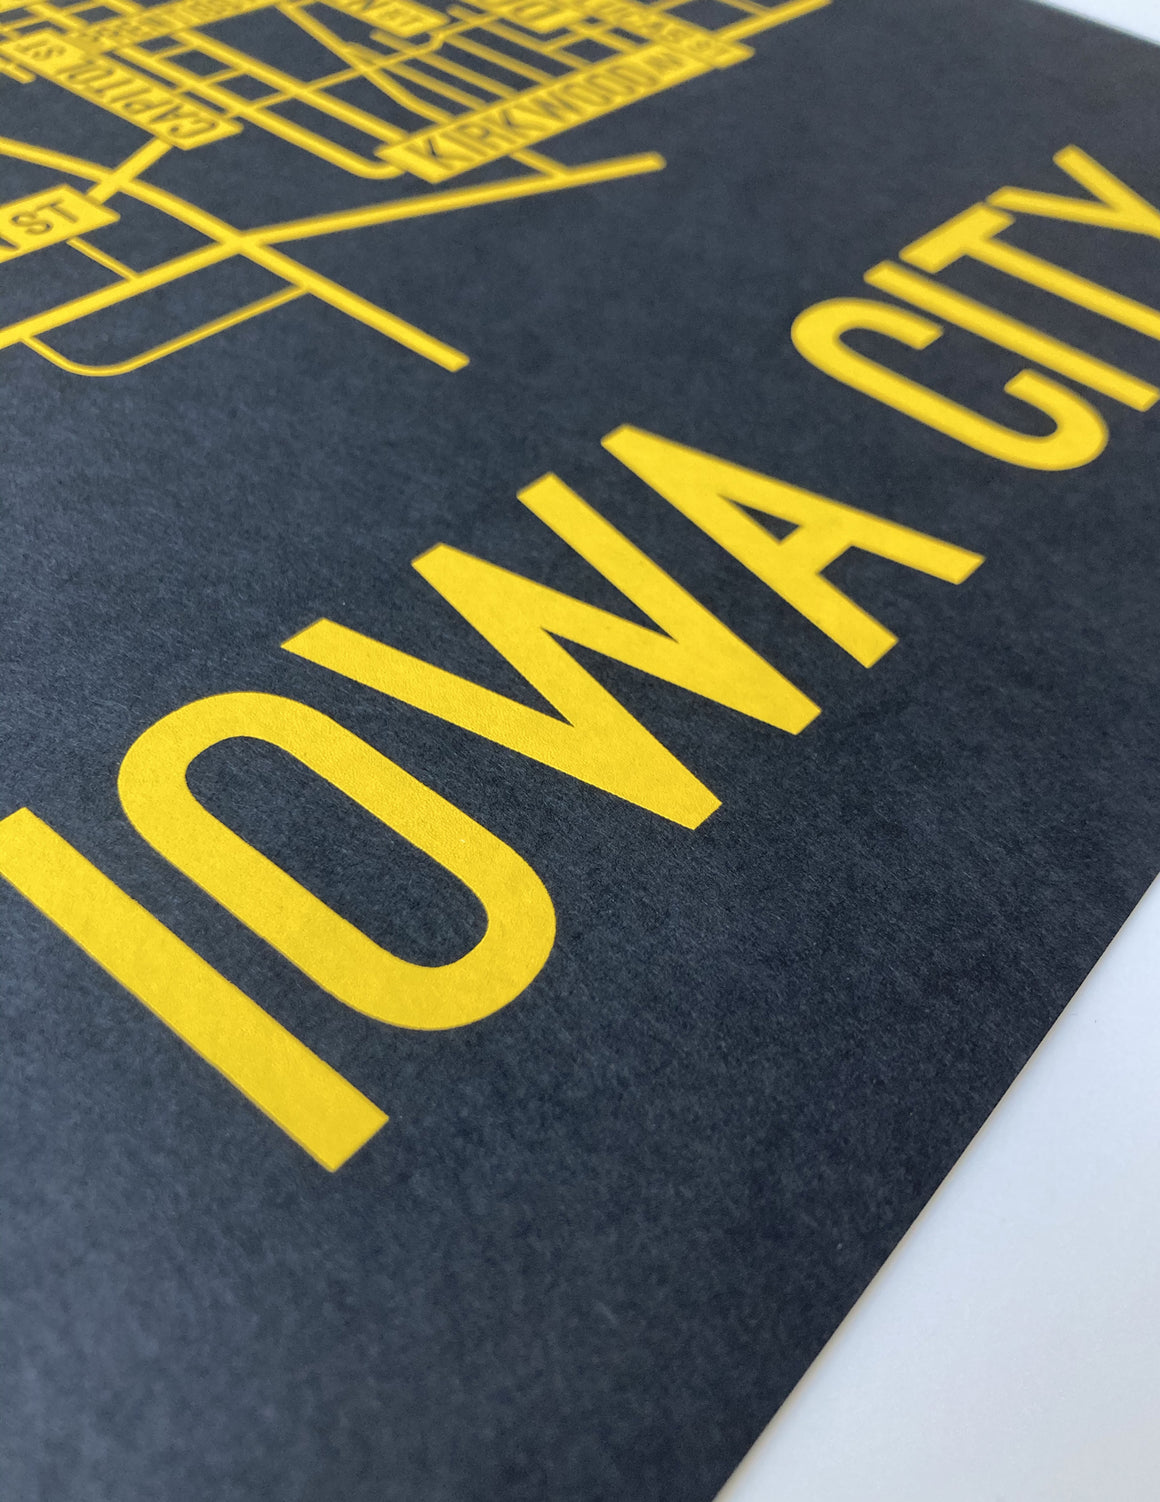 Iowa City, Iowa Street Map Screen Print